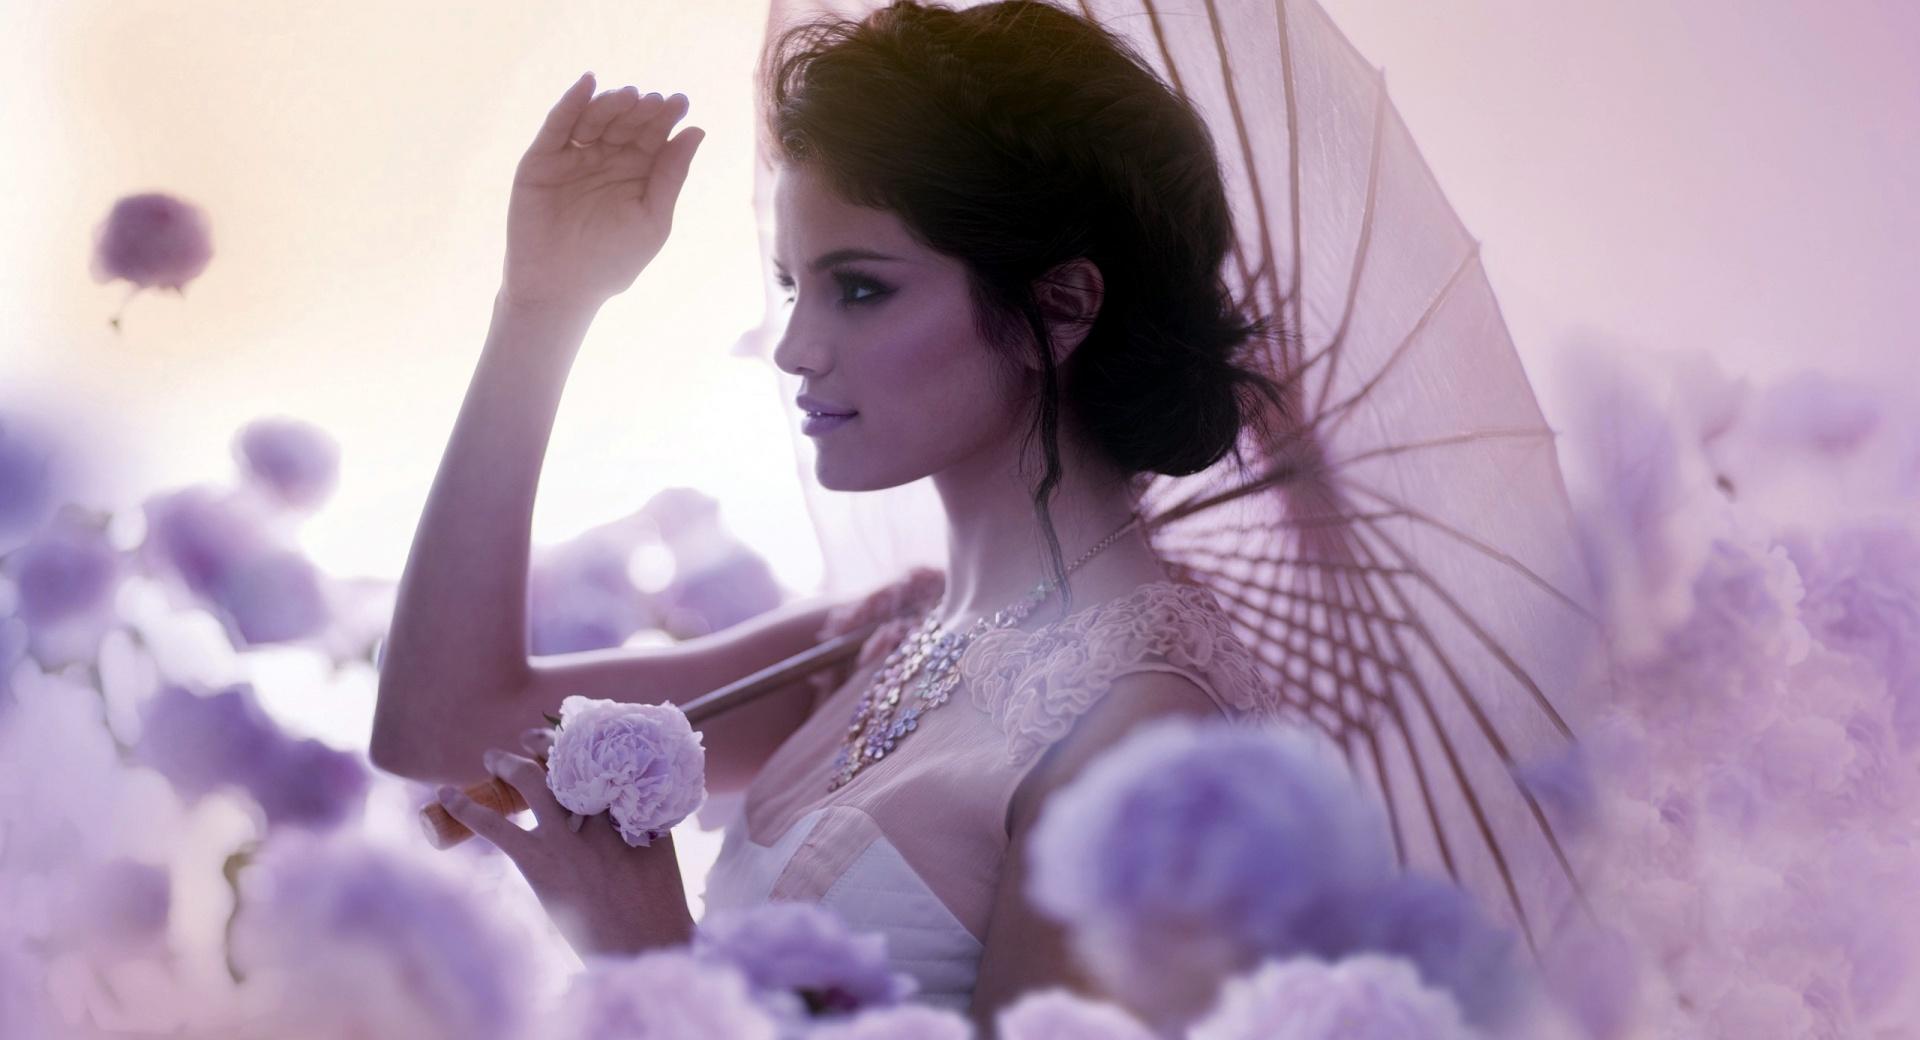 Beautiful Selena Gomez at 2048 x 2048 iPad size wallpapers HD quality